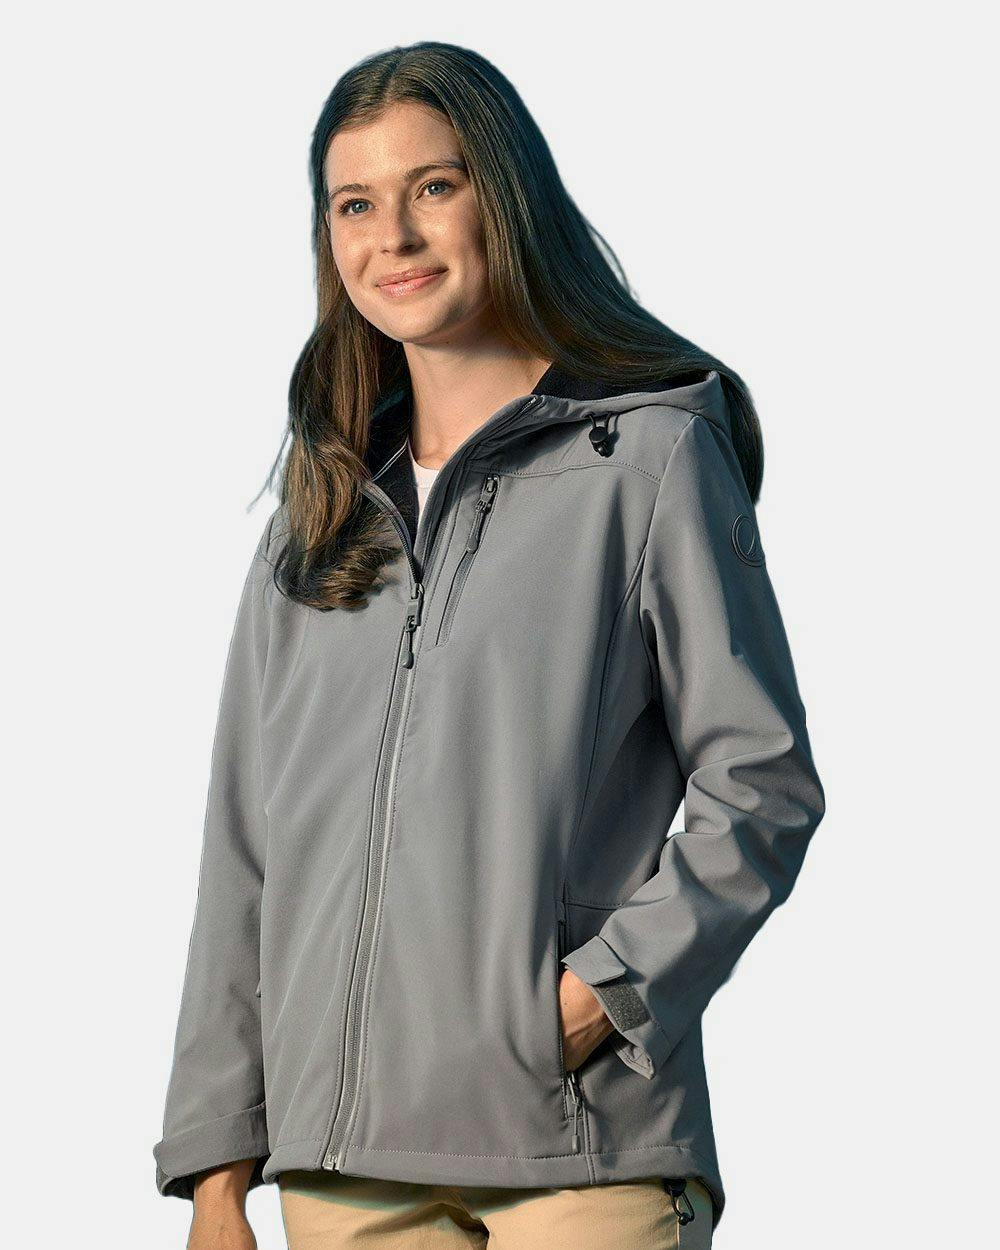 Image for Women's Wavestorm Softshell Hooded Jacket - N17790